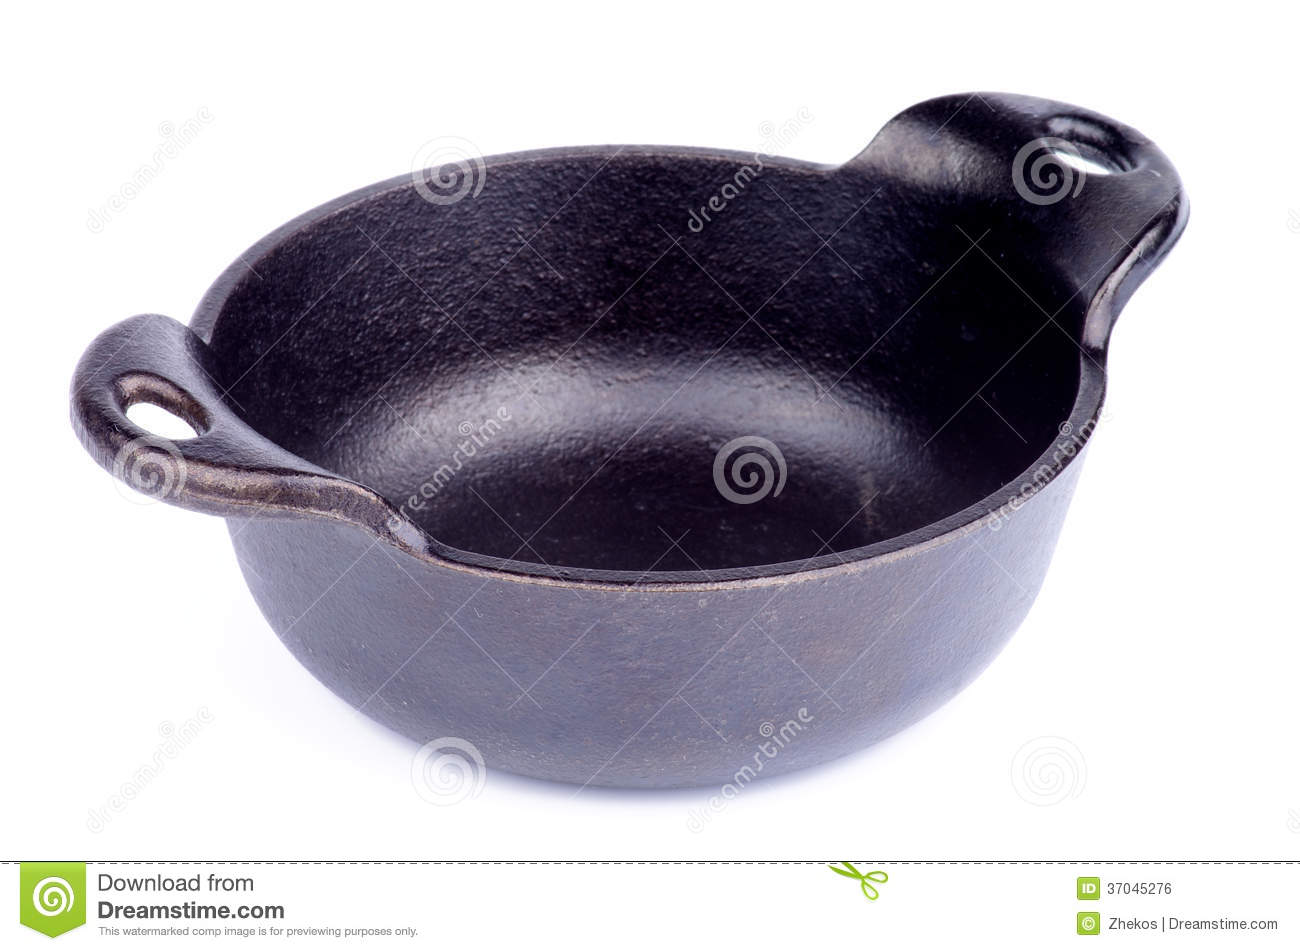 Black Cast Iron Stew Pot Royalty Free Stock Image   Image  37045276